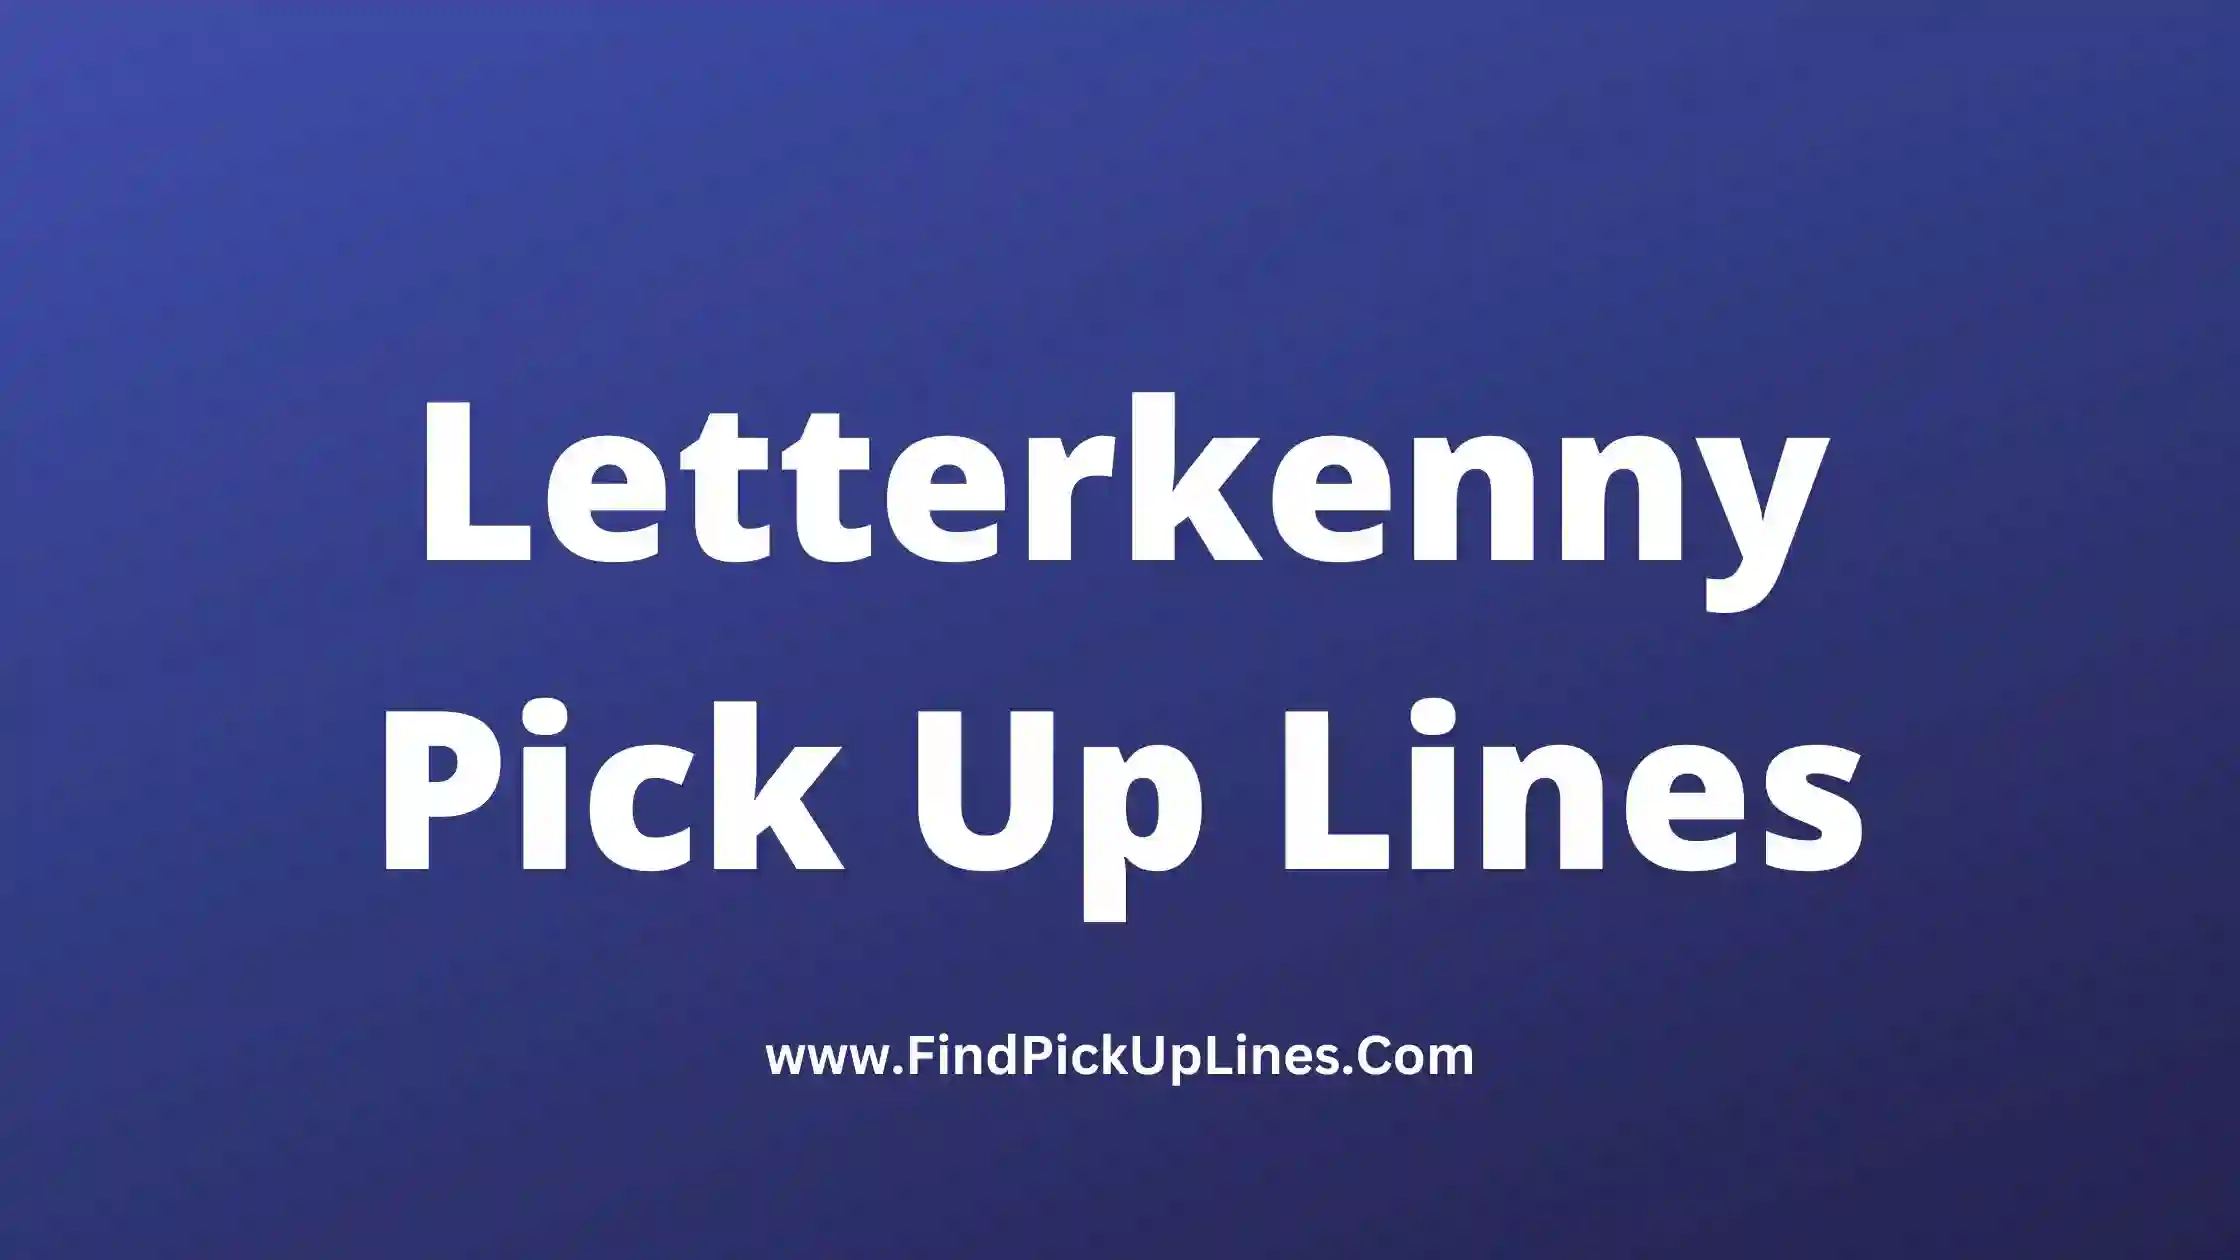 Letterkenny Pick Up Lines